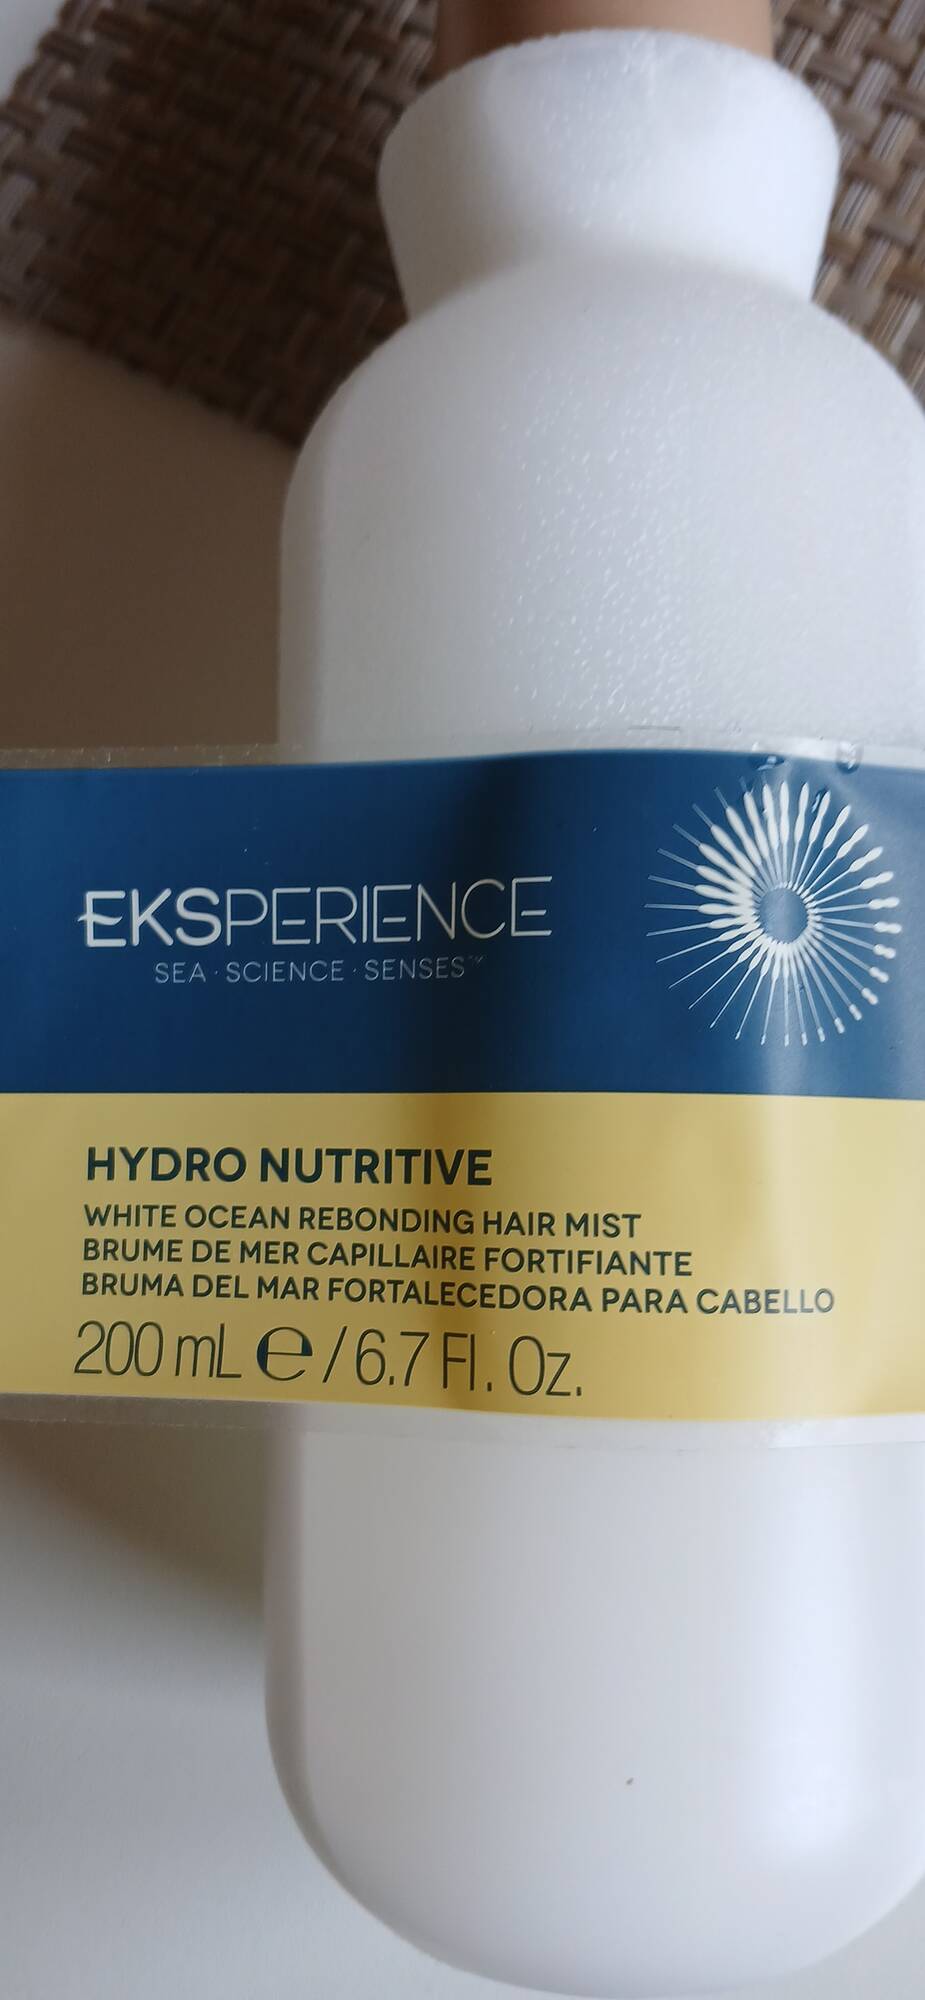 REVLON PROFESSIONAL - Eksperience hydro nutritive - Brume de mer capillaire 